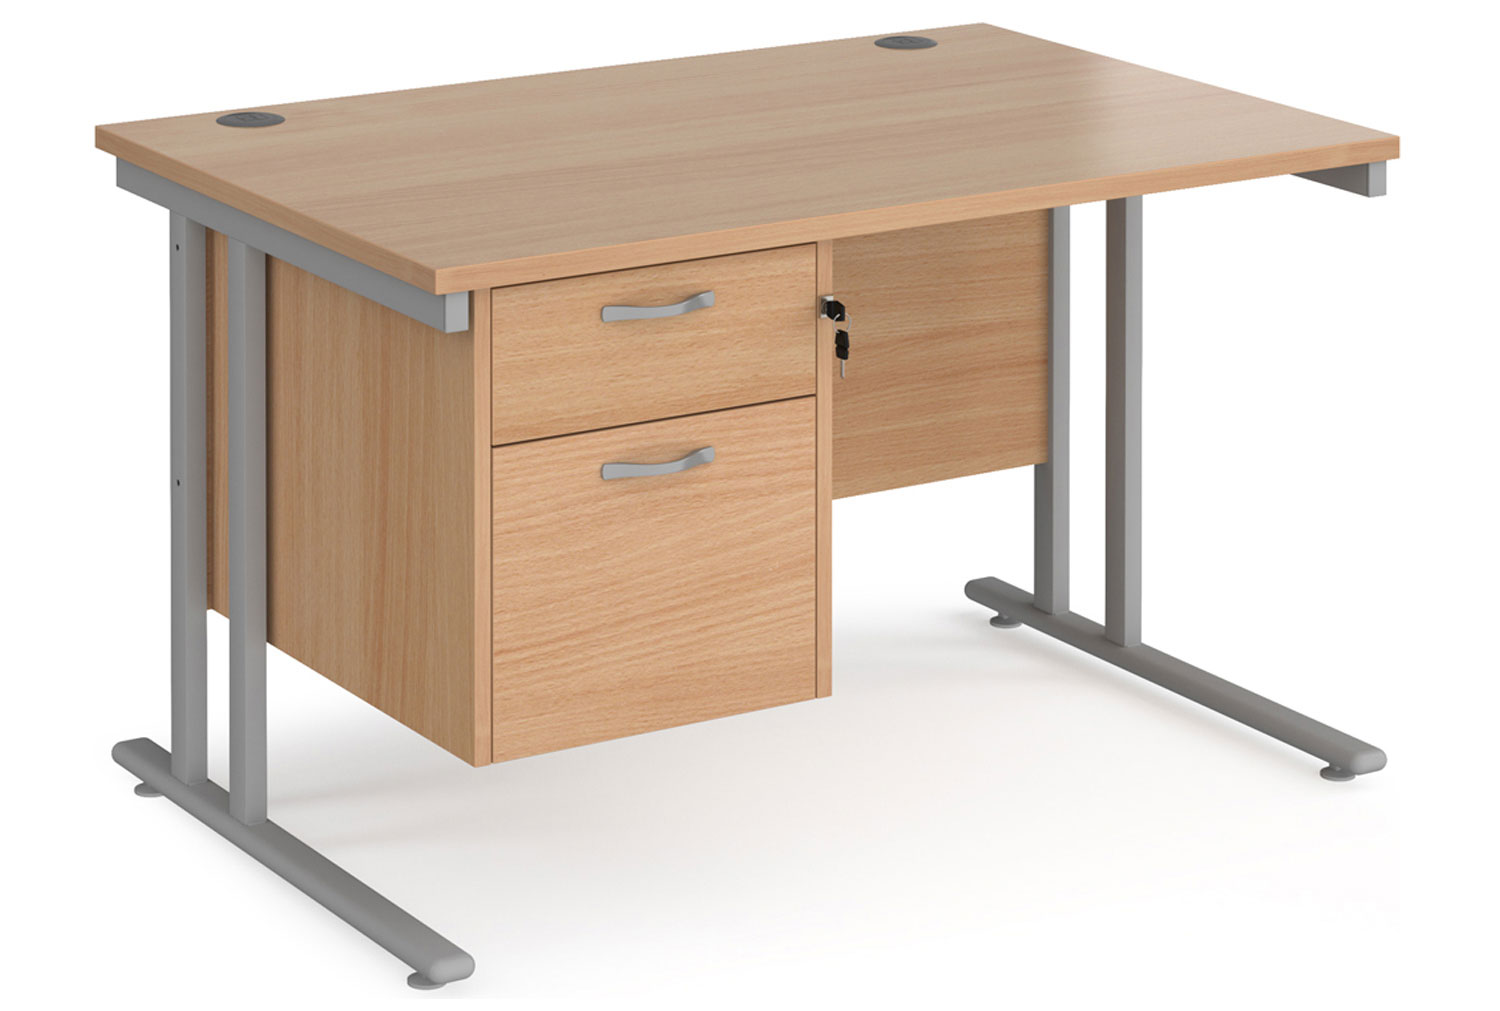 Value Line Deluxe C-Leg Rectangular Office Desk 2 Drawers (Silver Legs), 120wx80dx73h (cm), Beech